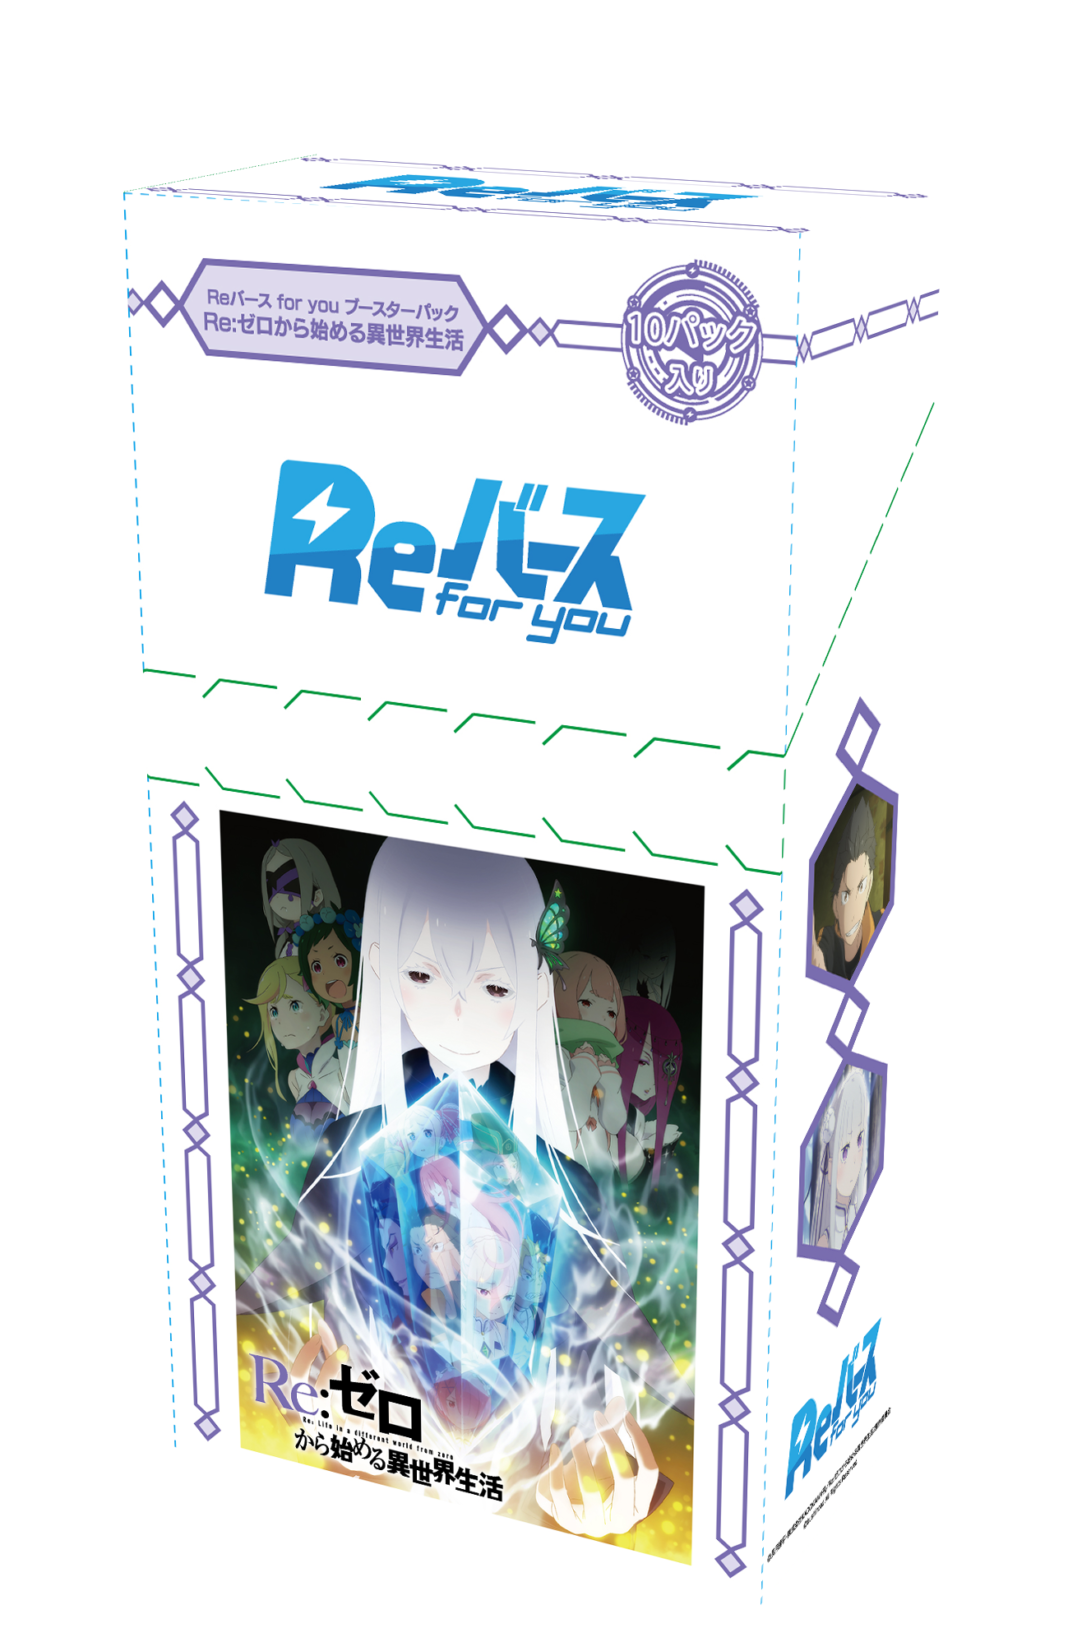 Reバース for youよりブースターパック『Re:ゼロから始める異世界生活』8月6日(金)発売！のメイン画像